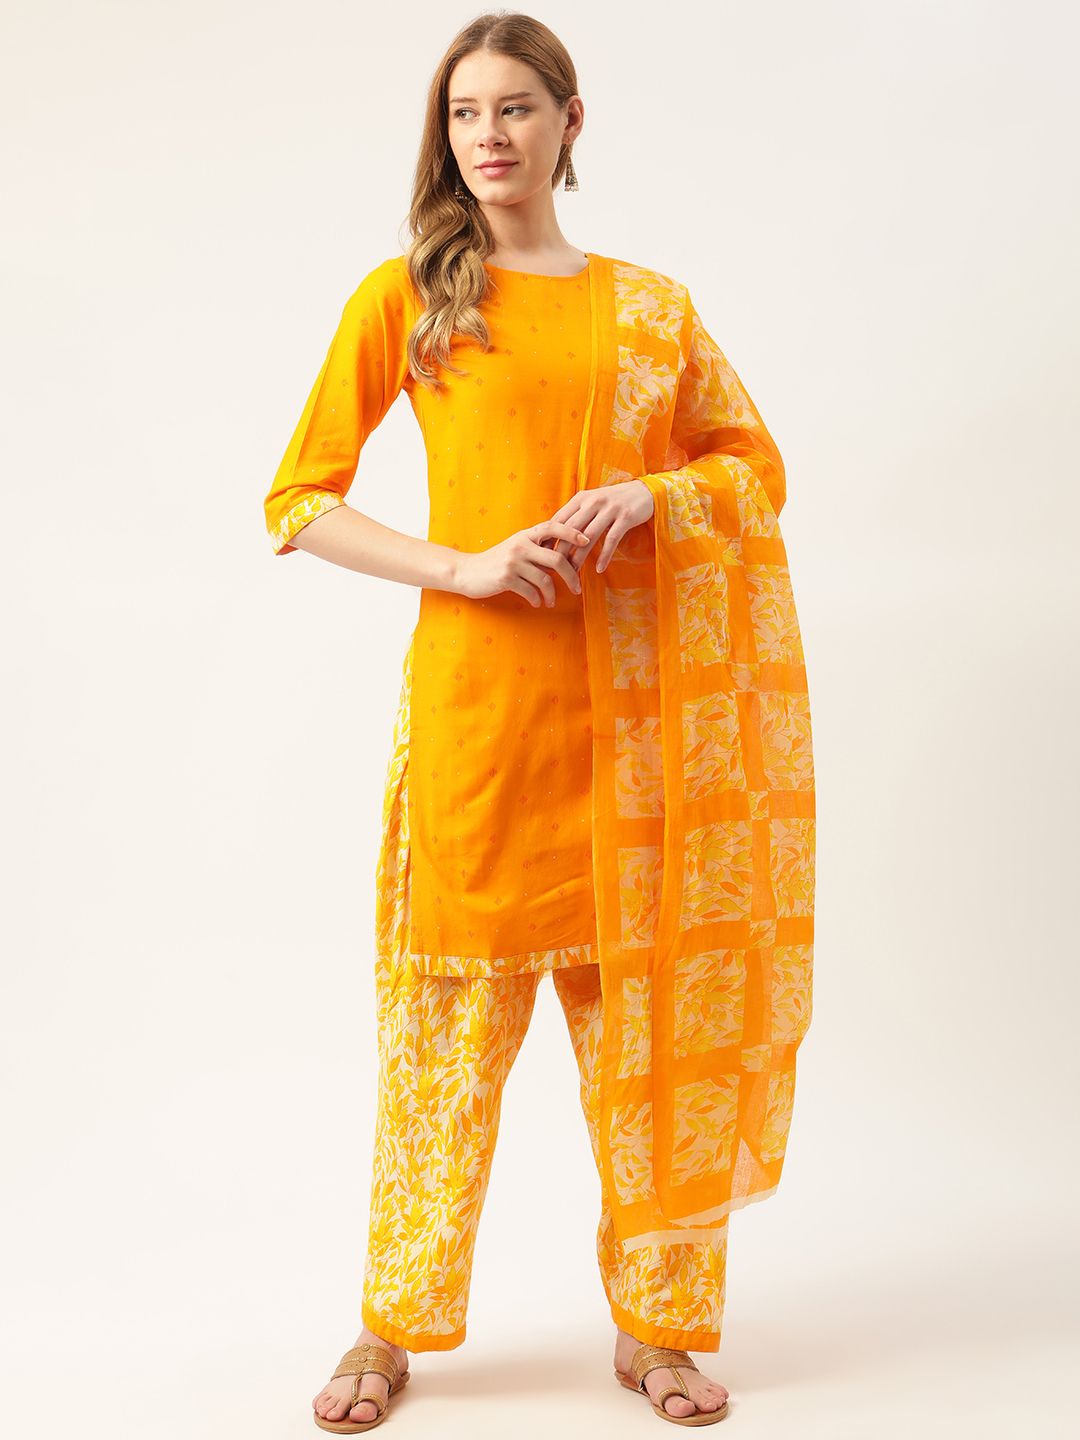 PIRKO Orange & White Printed Pure Cotton Unstitched Dress Material Price in India